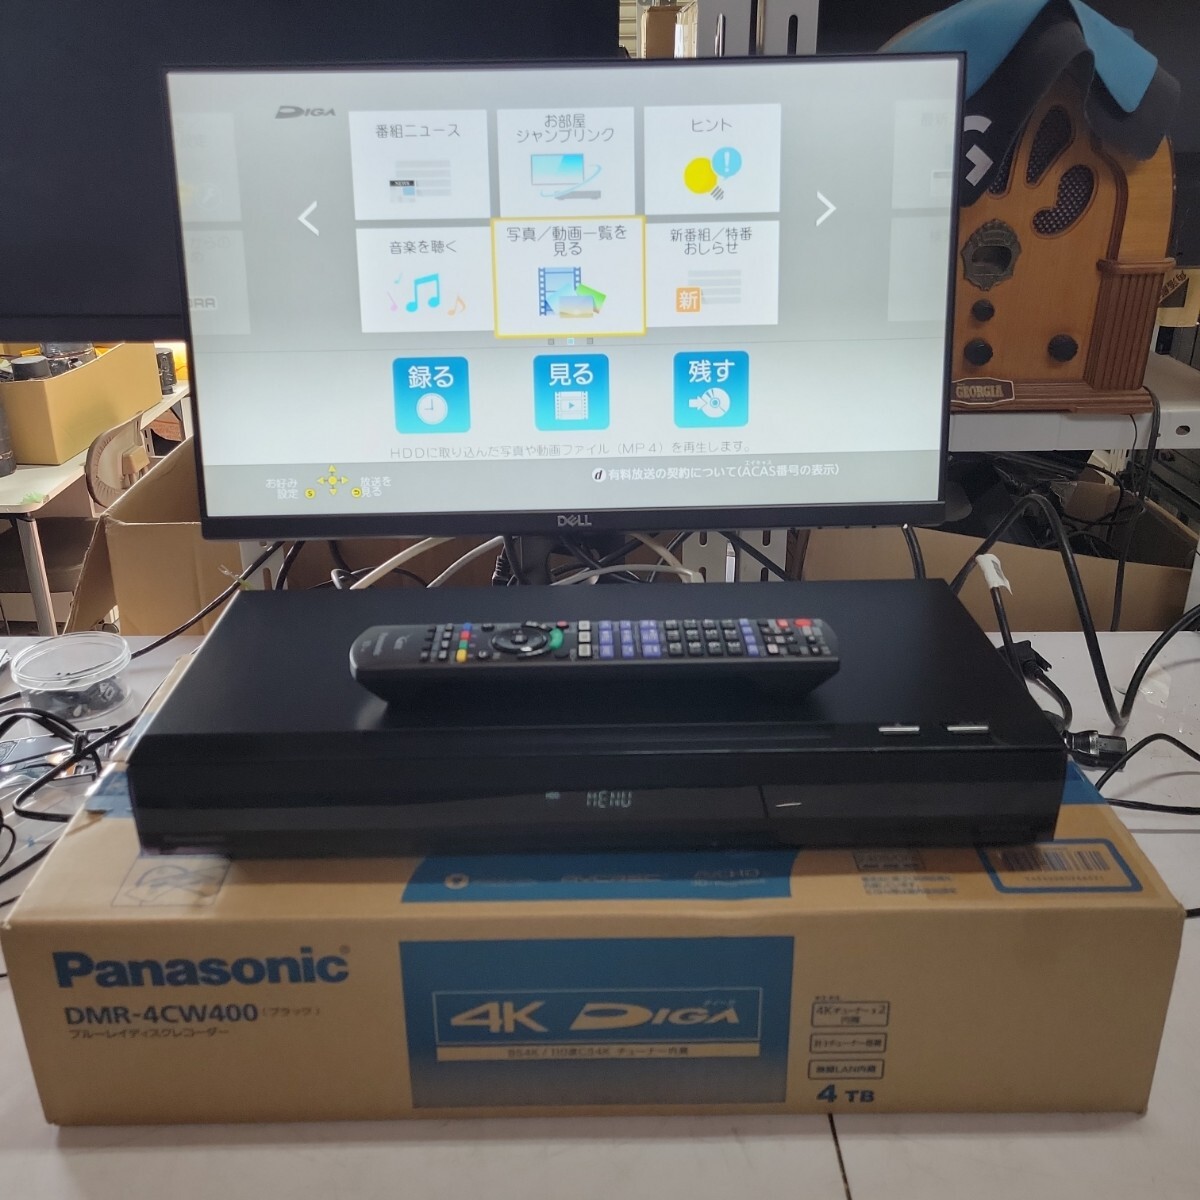 Panasonic パナソニック ブルーレイレコーダー 4K DIGA DMR-4CW400 2019年 元箱あり3番組同時録画 4TB 中古作動品 管理番号 2403231の画像2